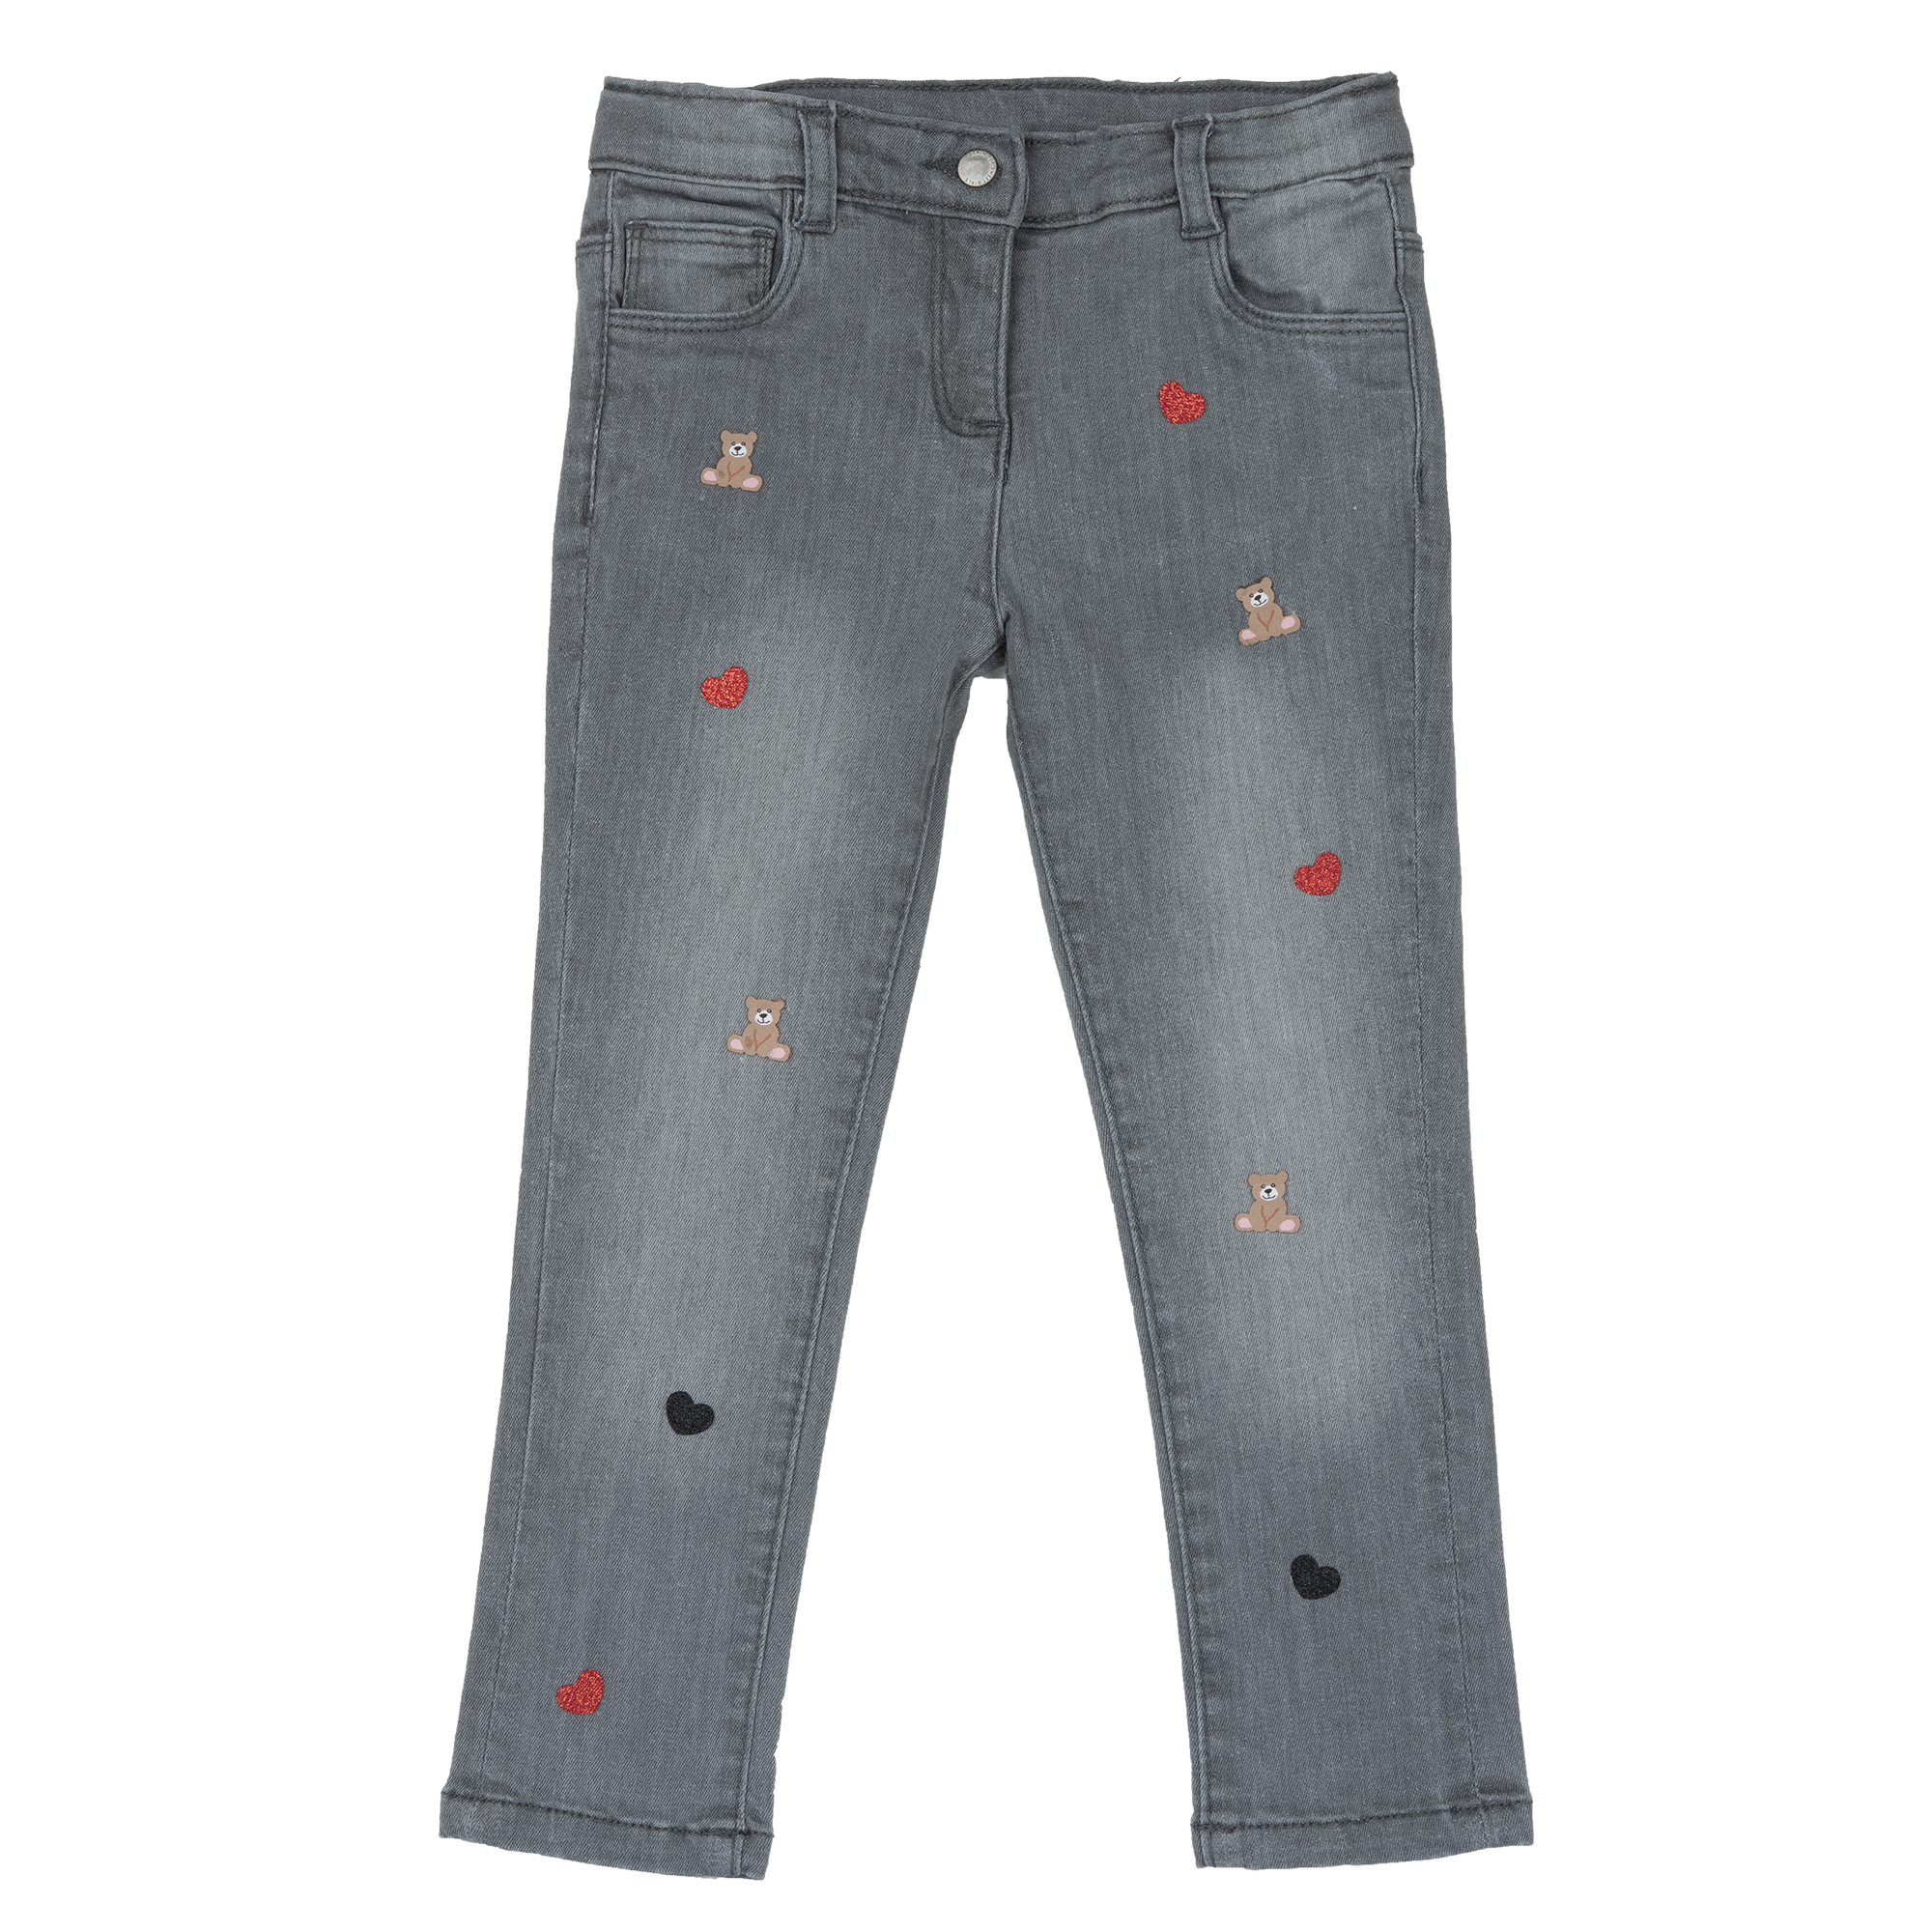 Pantaloni Copii Chicco, Gri, 08685-63mc